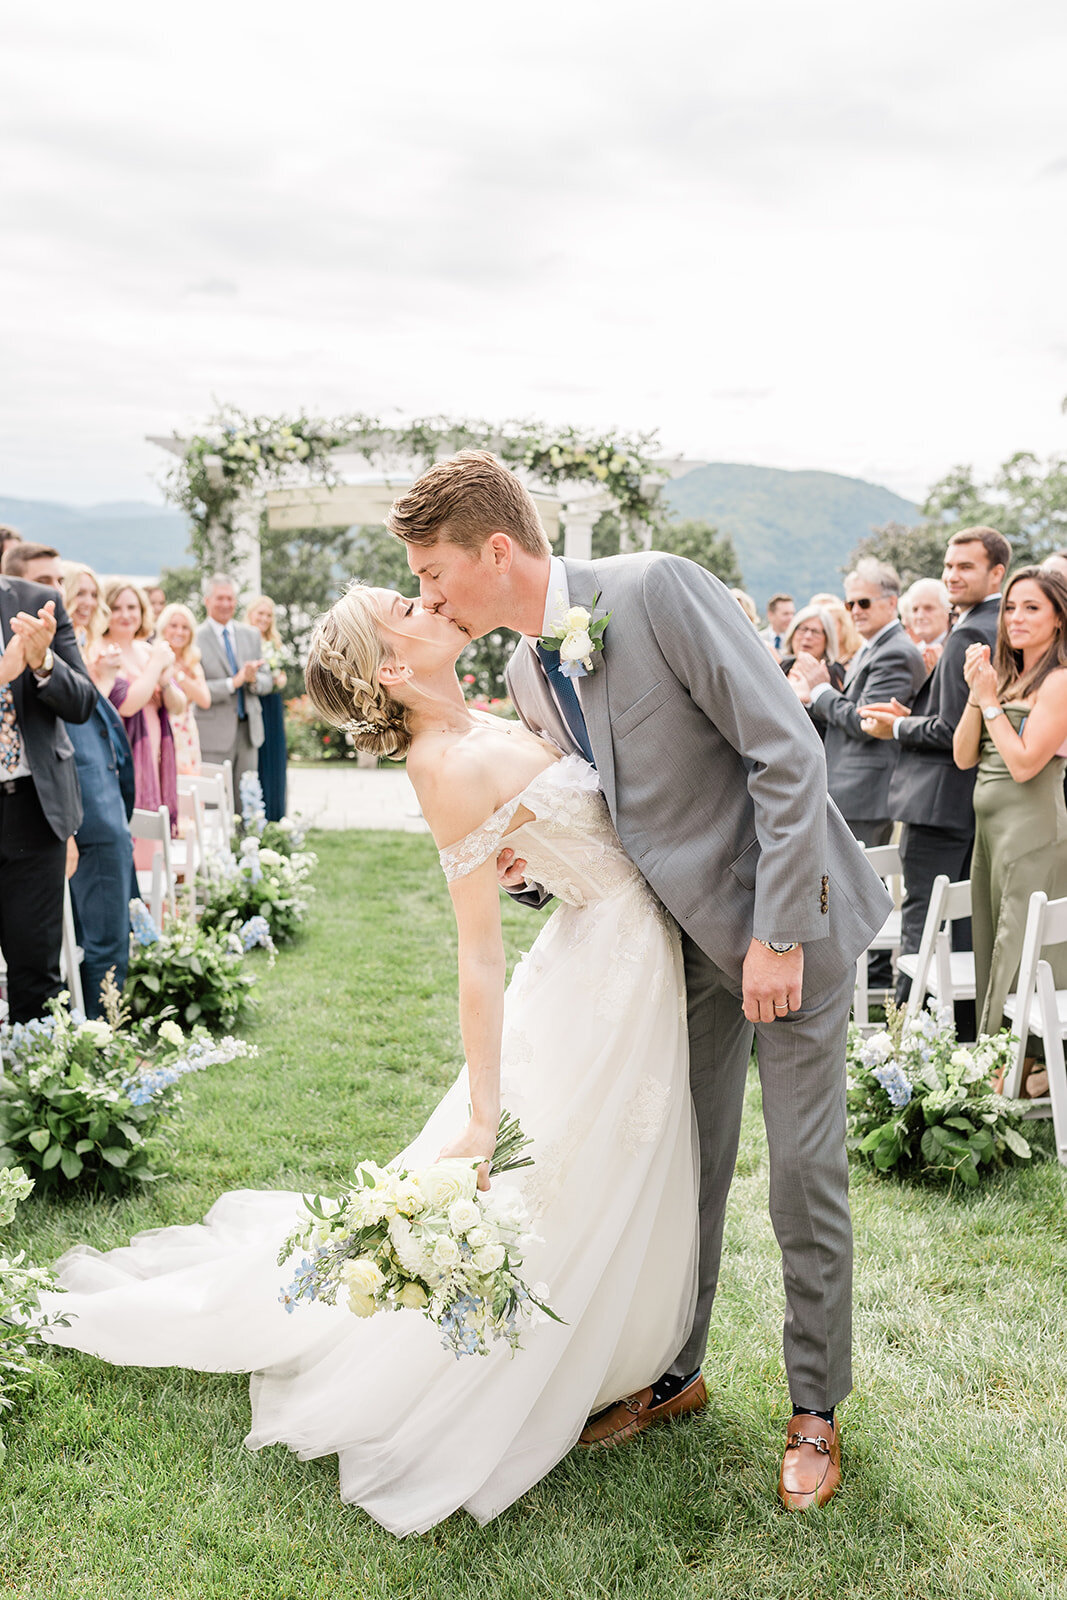 Steph-Taylor-Wedding-Ceremony-By-Lizzie-Burger-Photo-115_websize